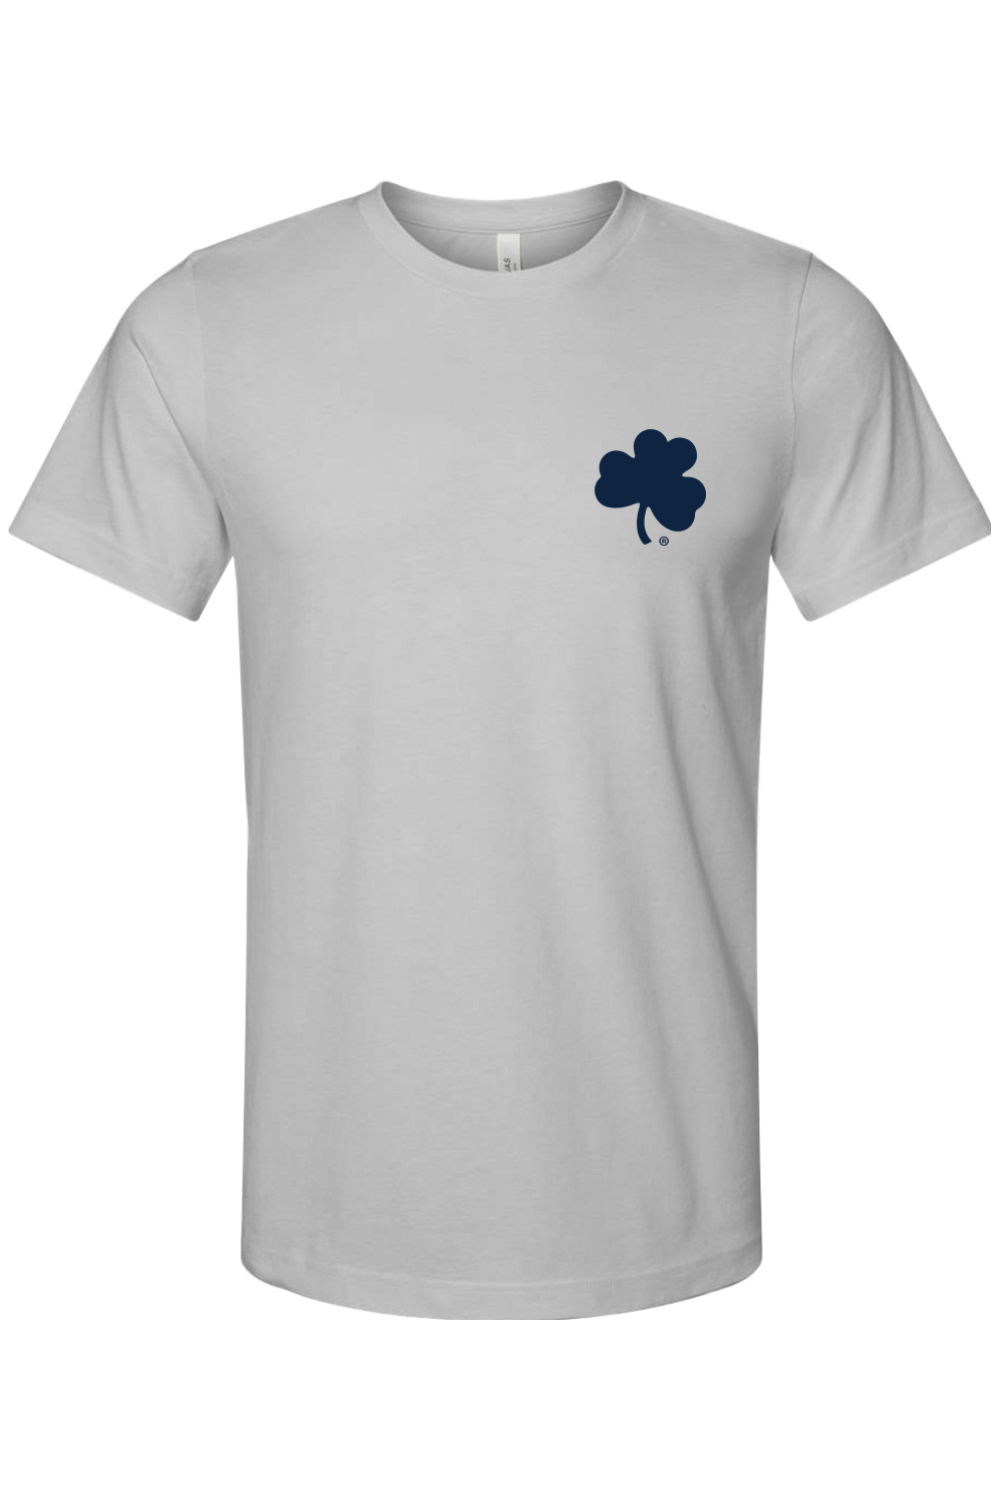 Unfaised Sport Grey T-Shirt Sports Shersey - Football (Clover)